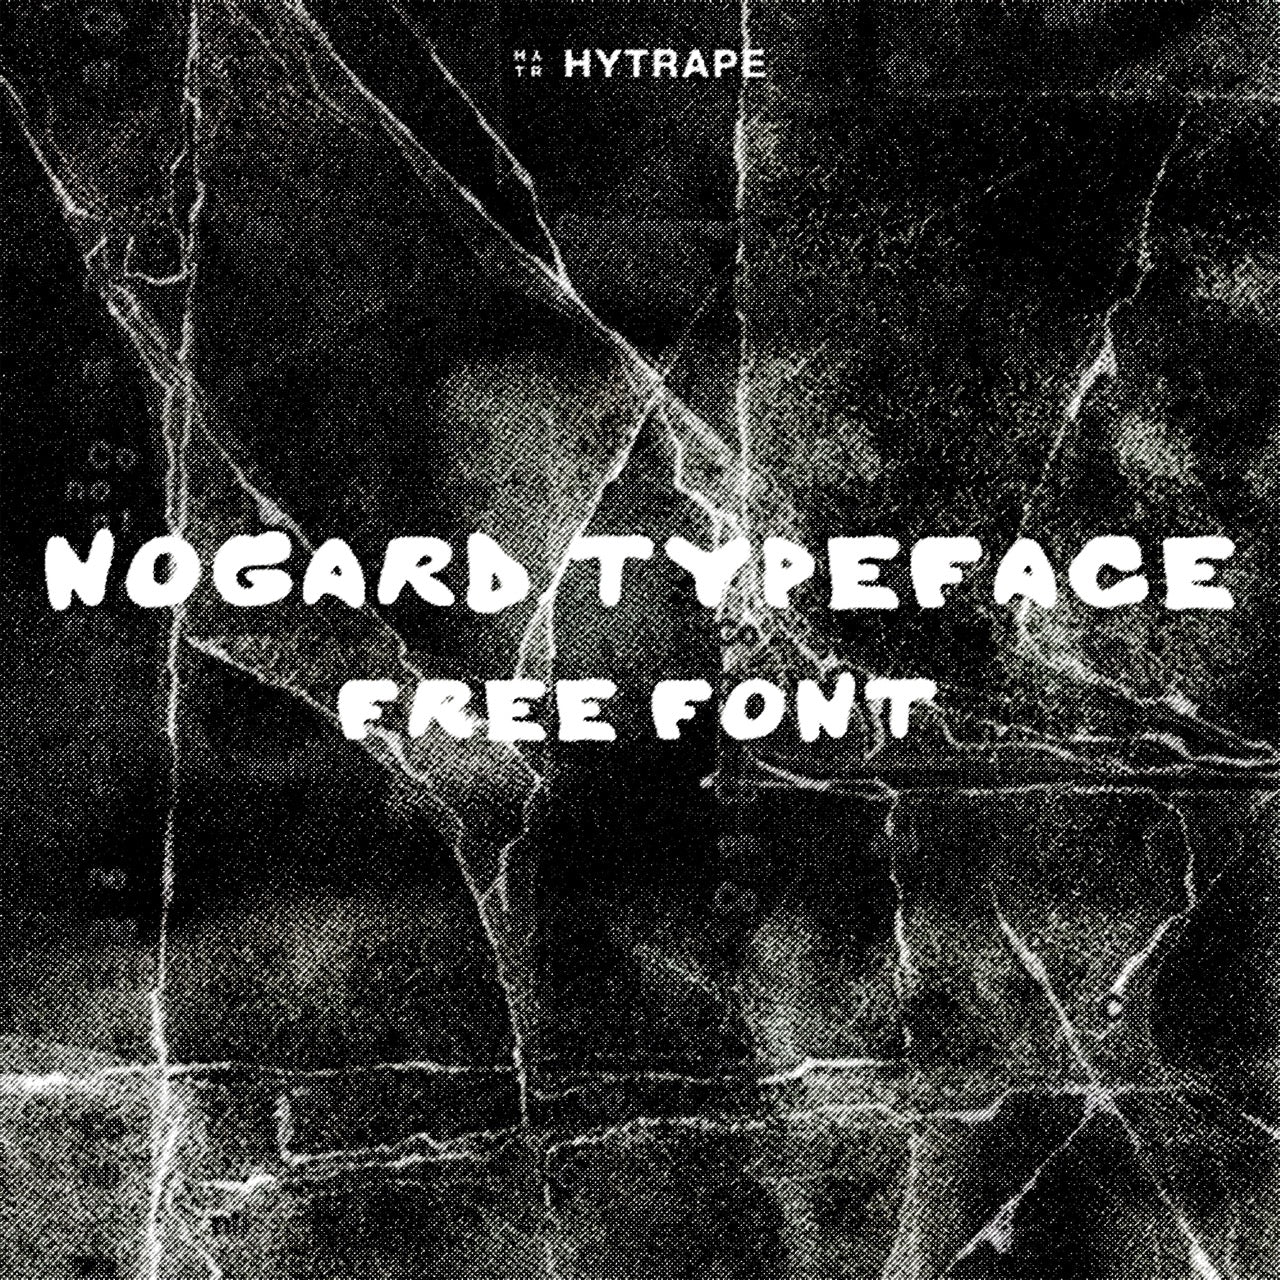 NOGARD TYPEFACE FONT (FREE) HYTRAPE